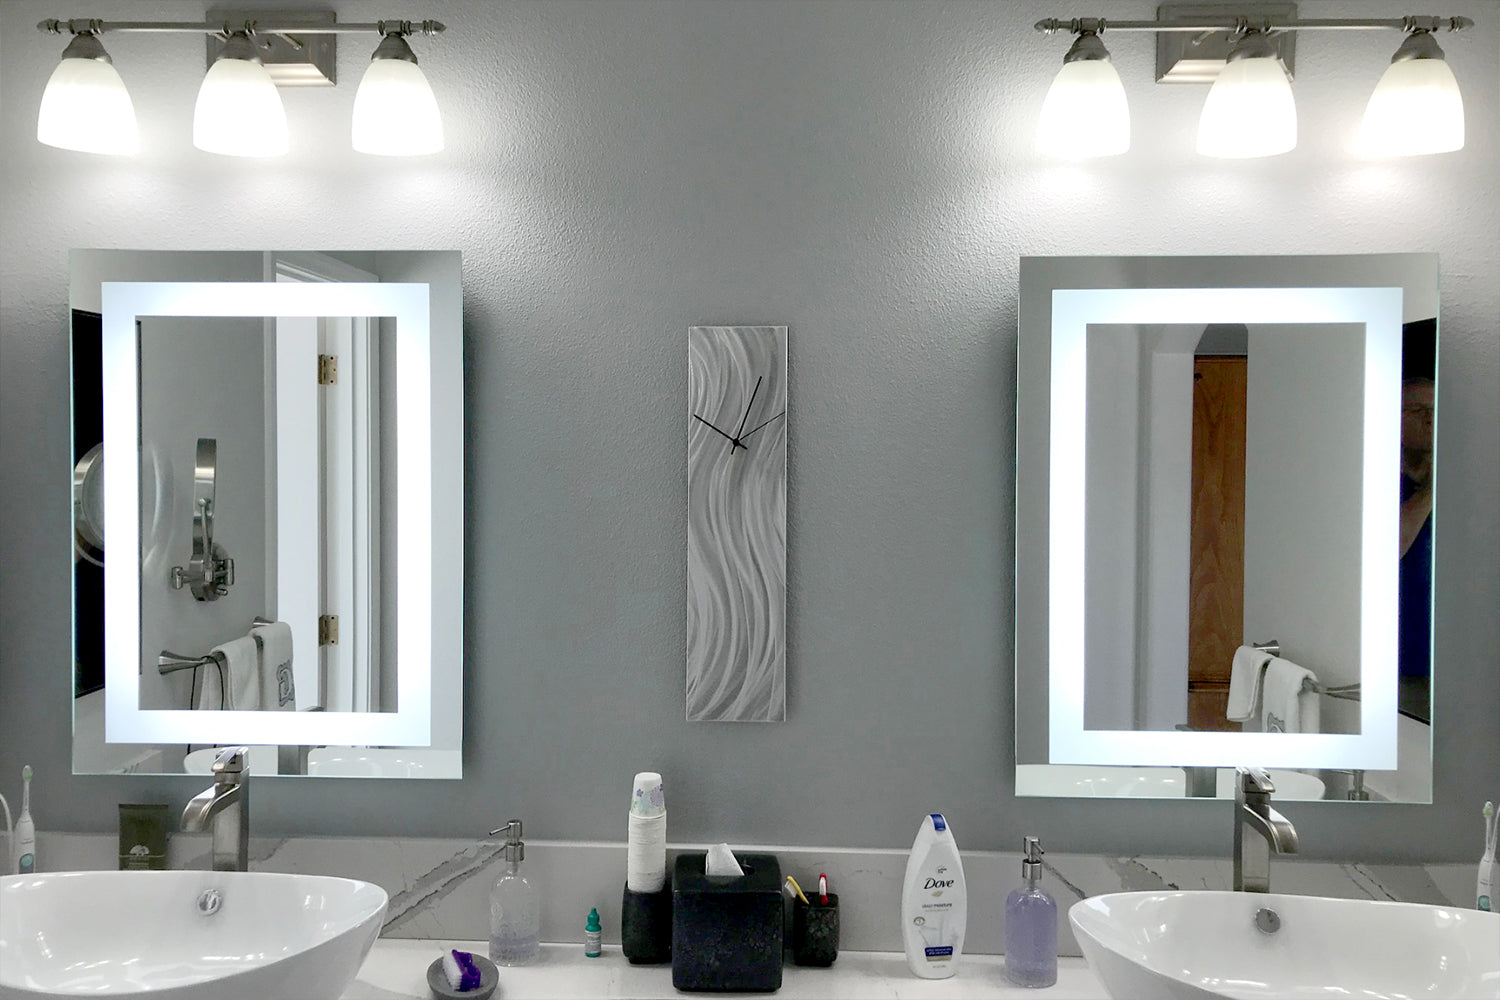 Channel Bathroom Vanity Mirror